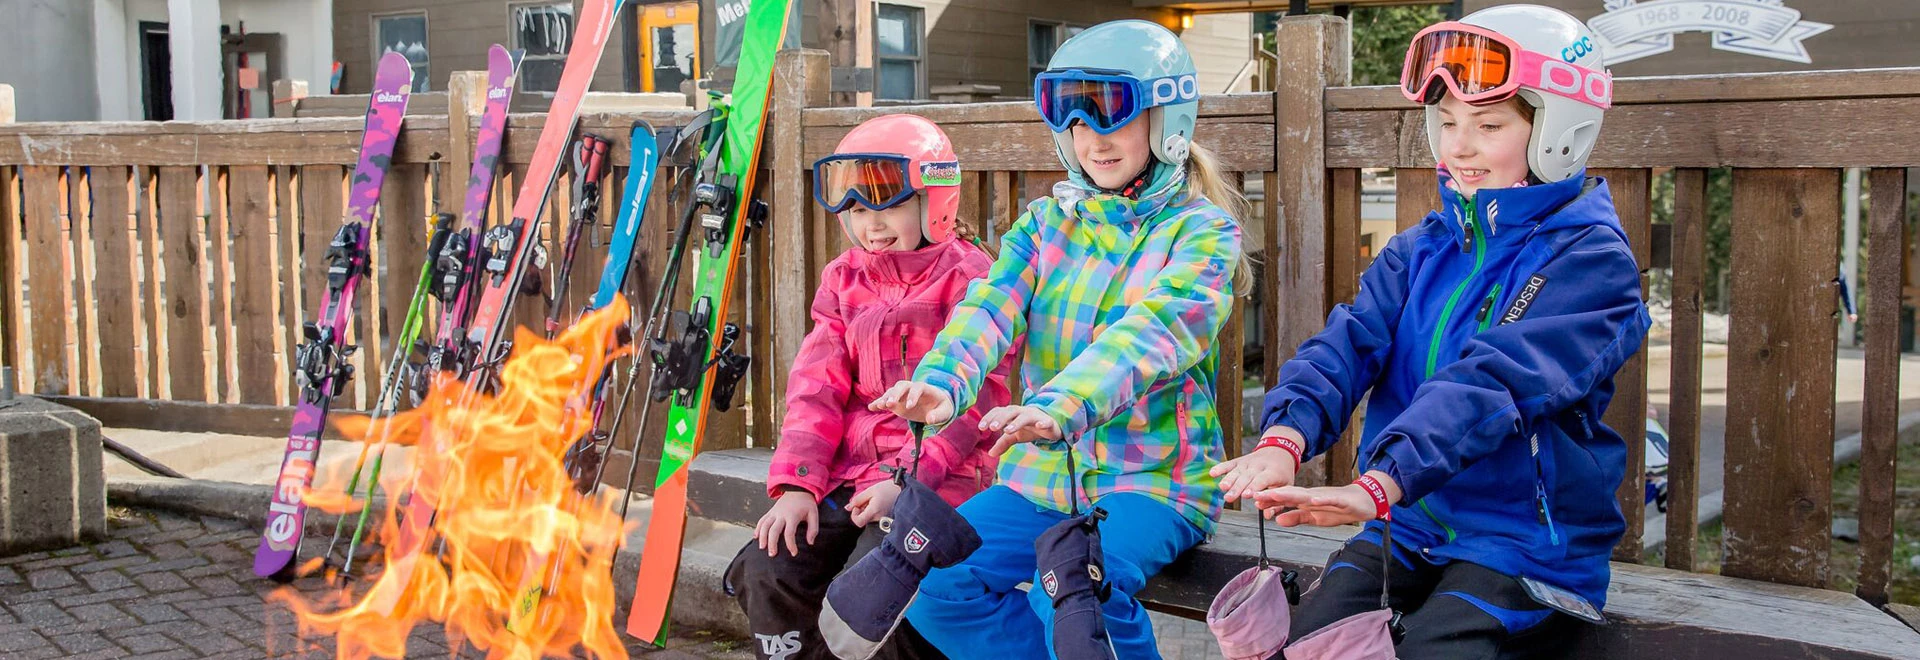 AK Ski of Switzerland - Ski & Snowboard School Snowacademy, Saalbach